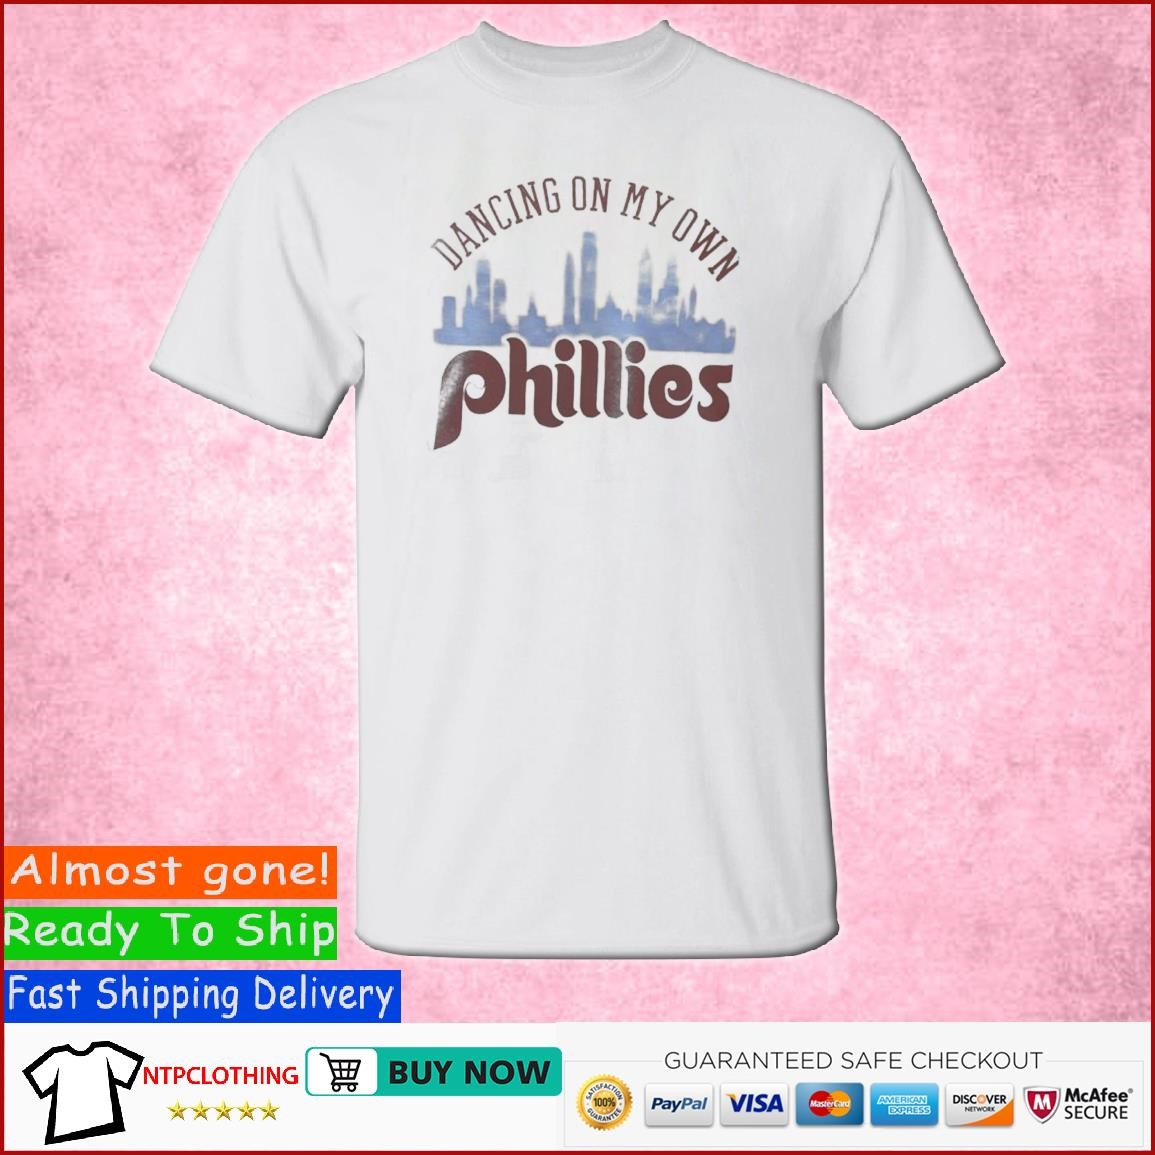 Phillies Dancing On My Own Shirt - 9Teeshirt